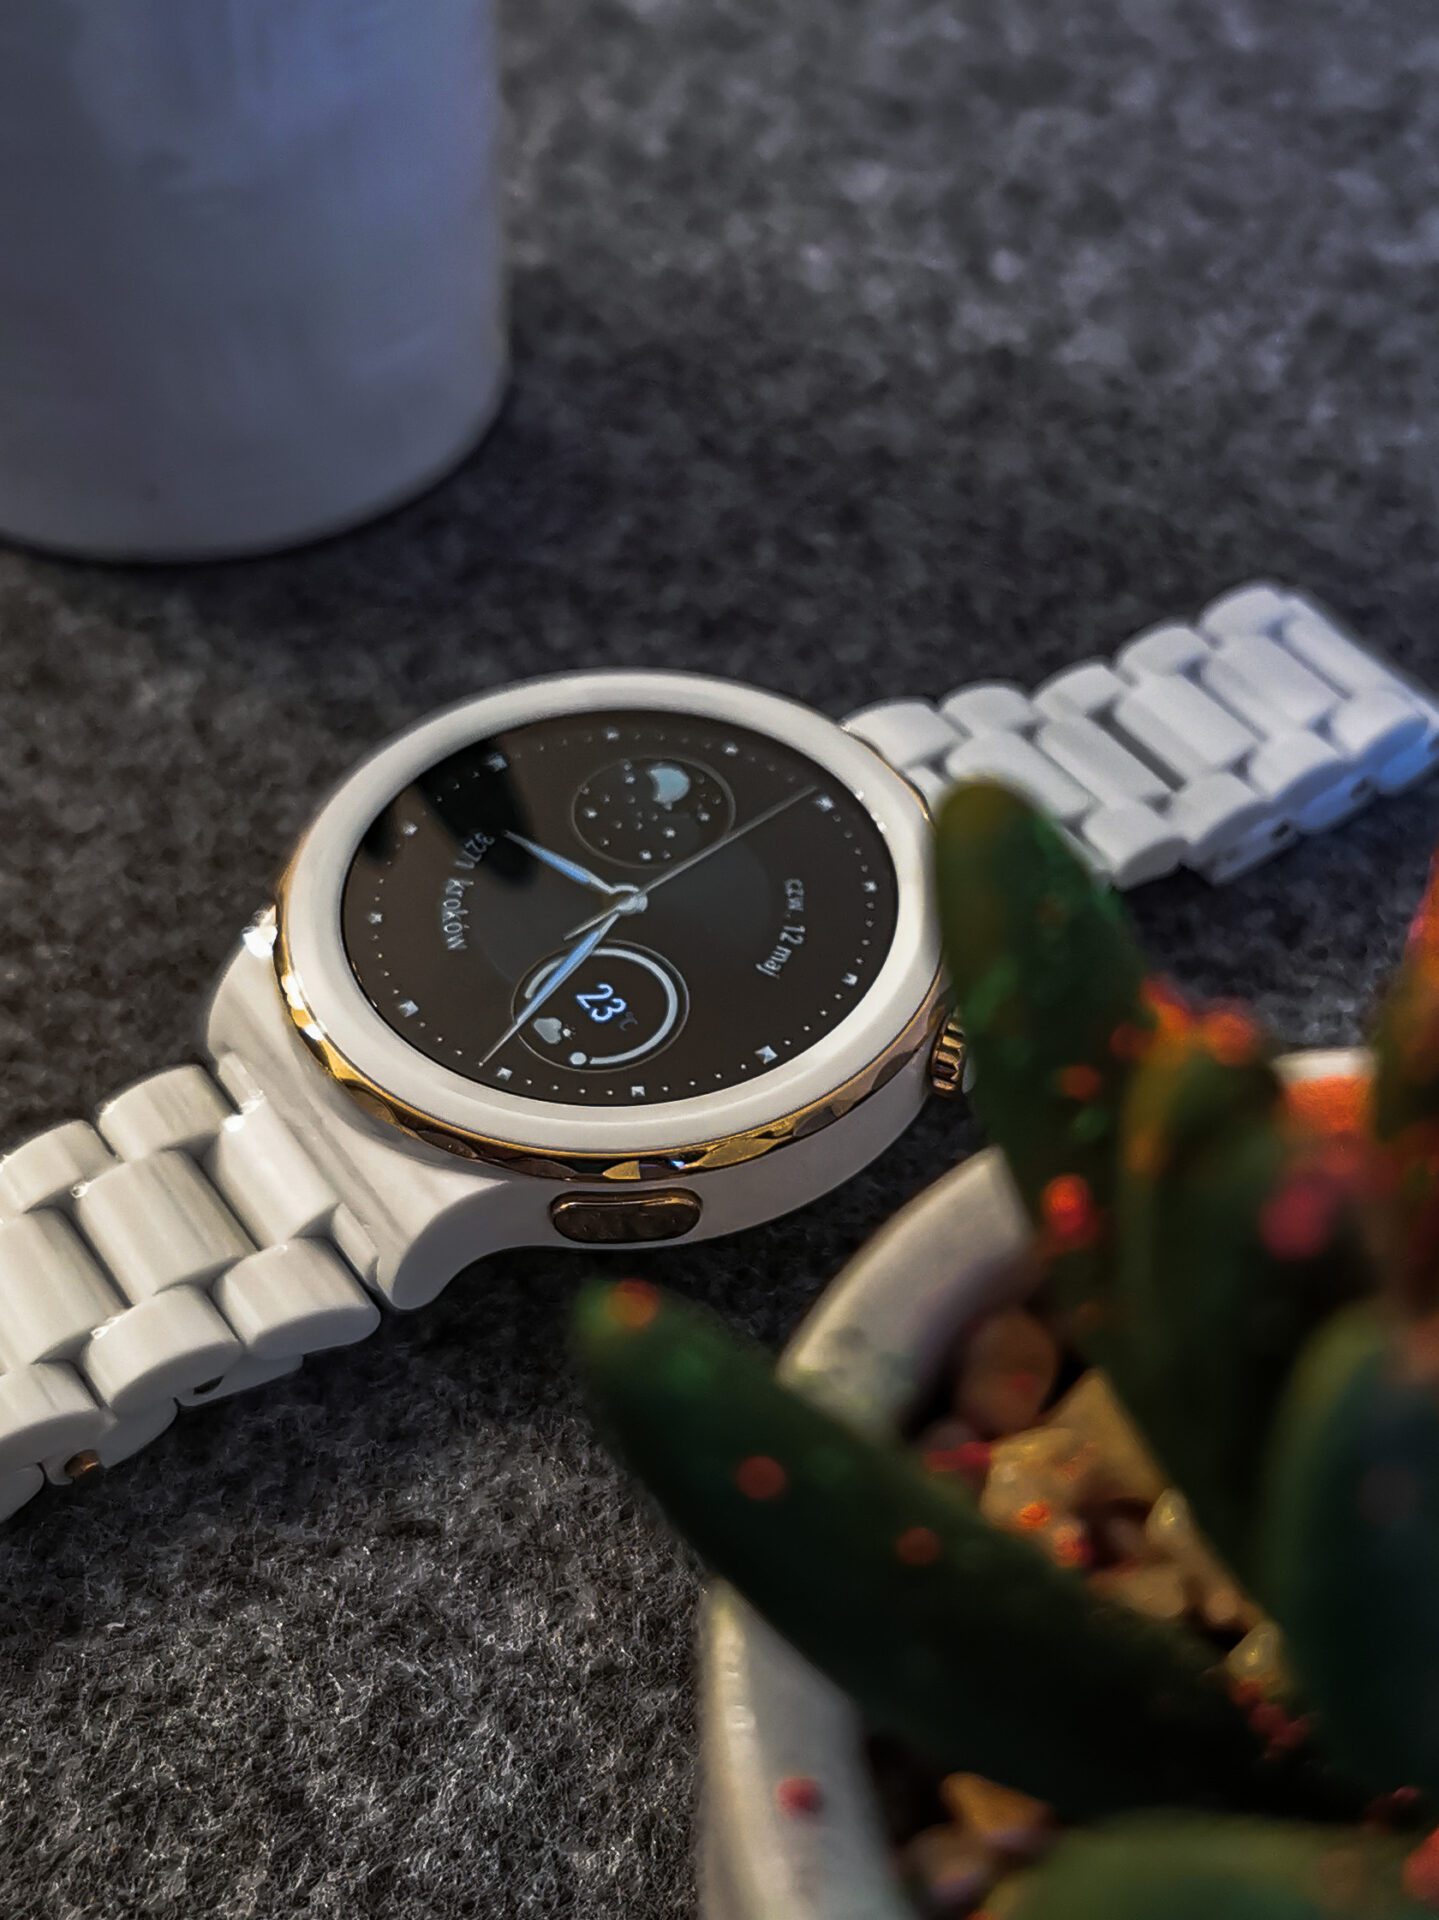 Huawei Watch GT 3 Pro Elegant